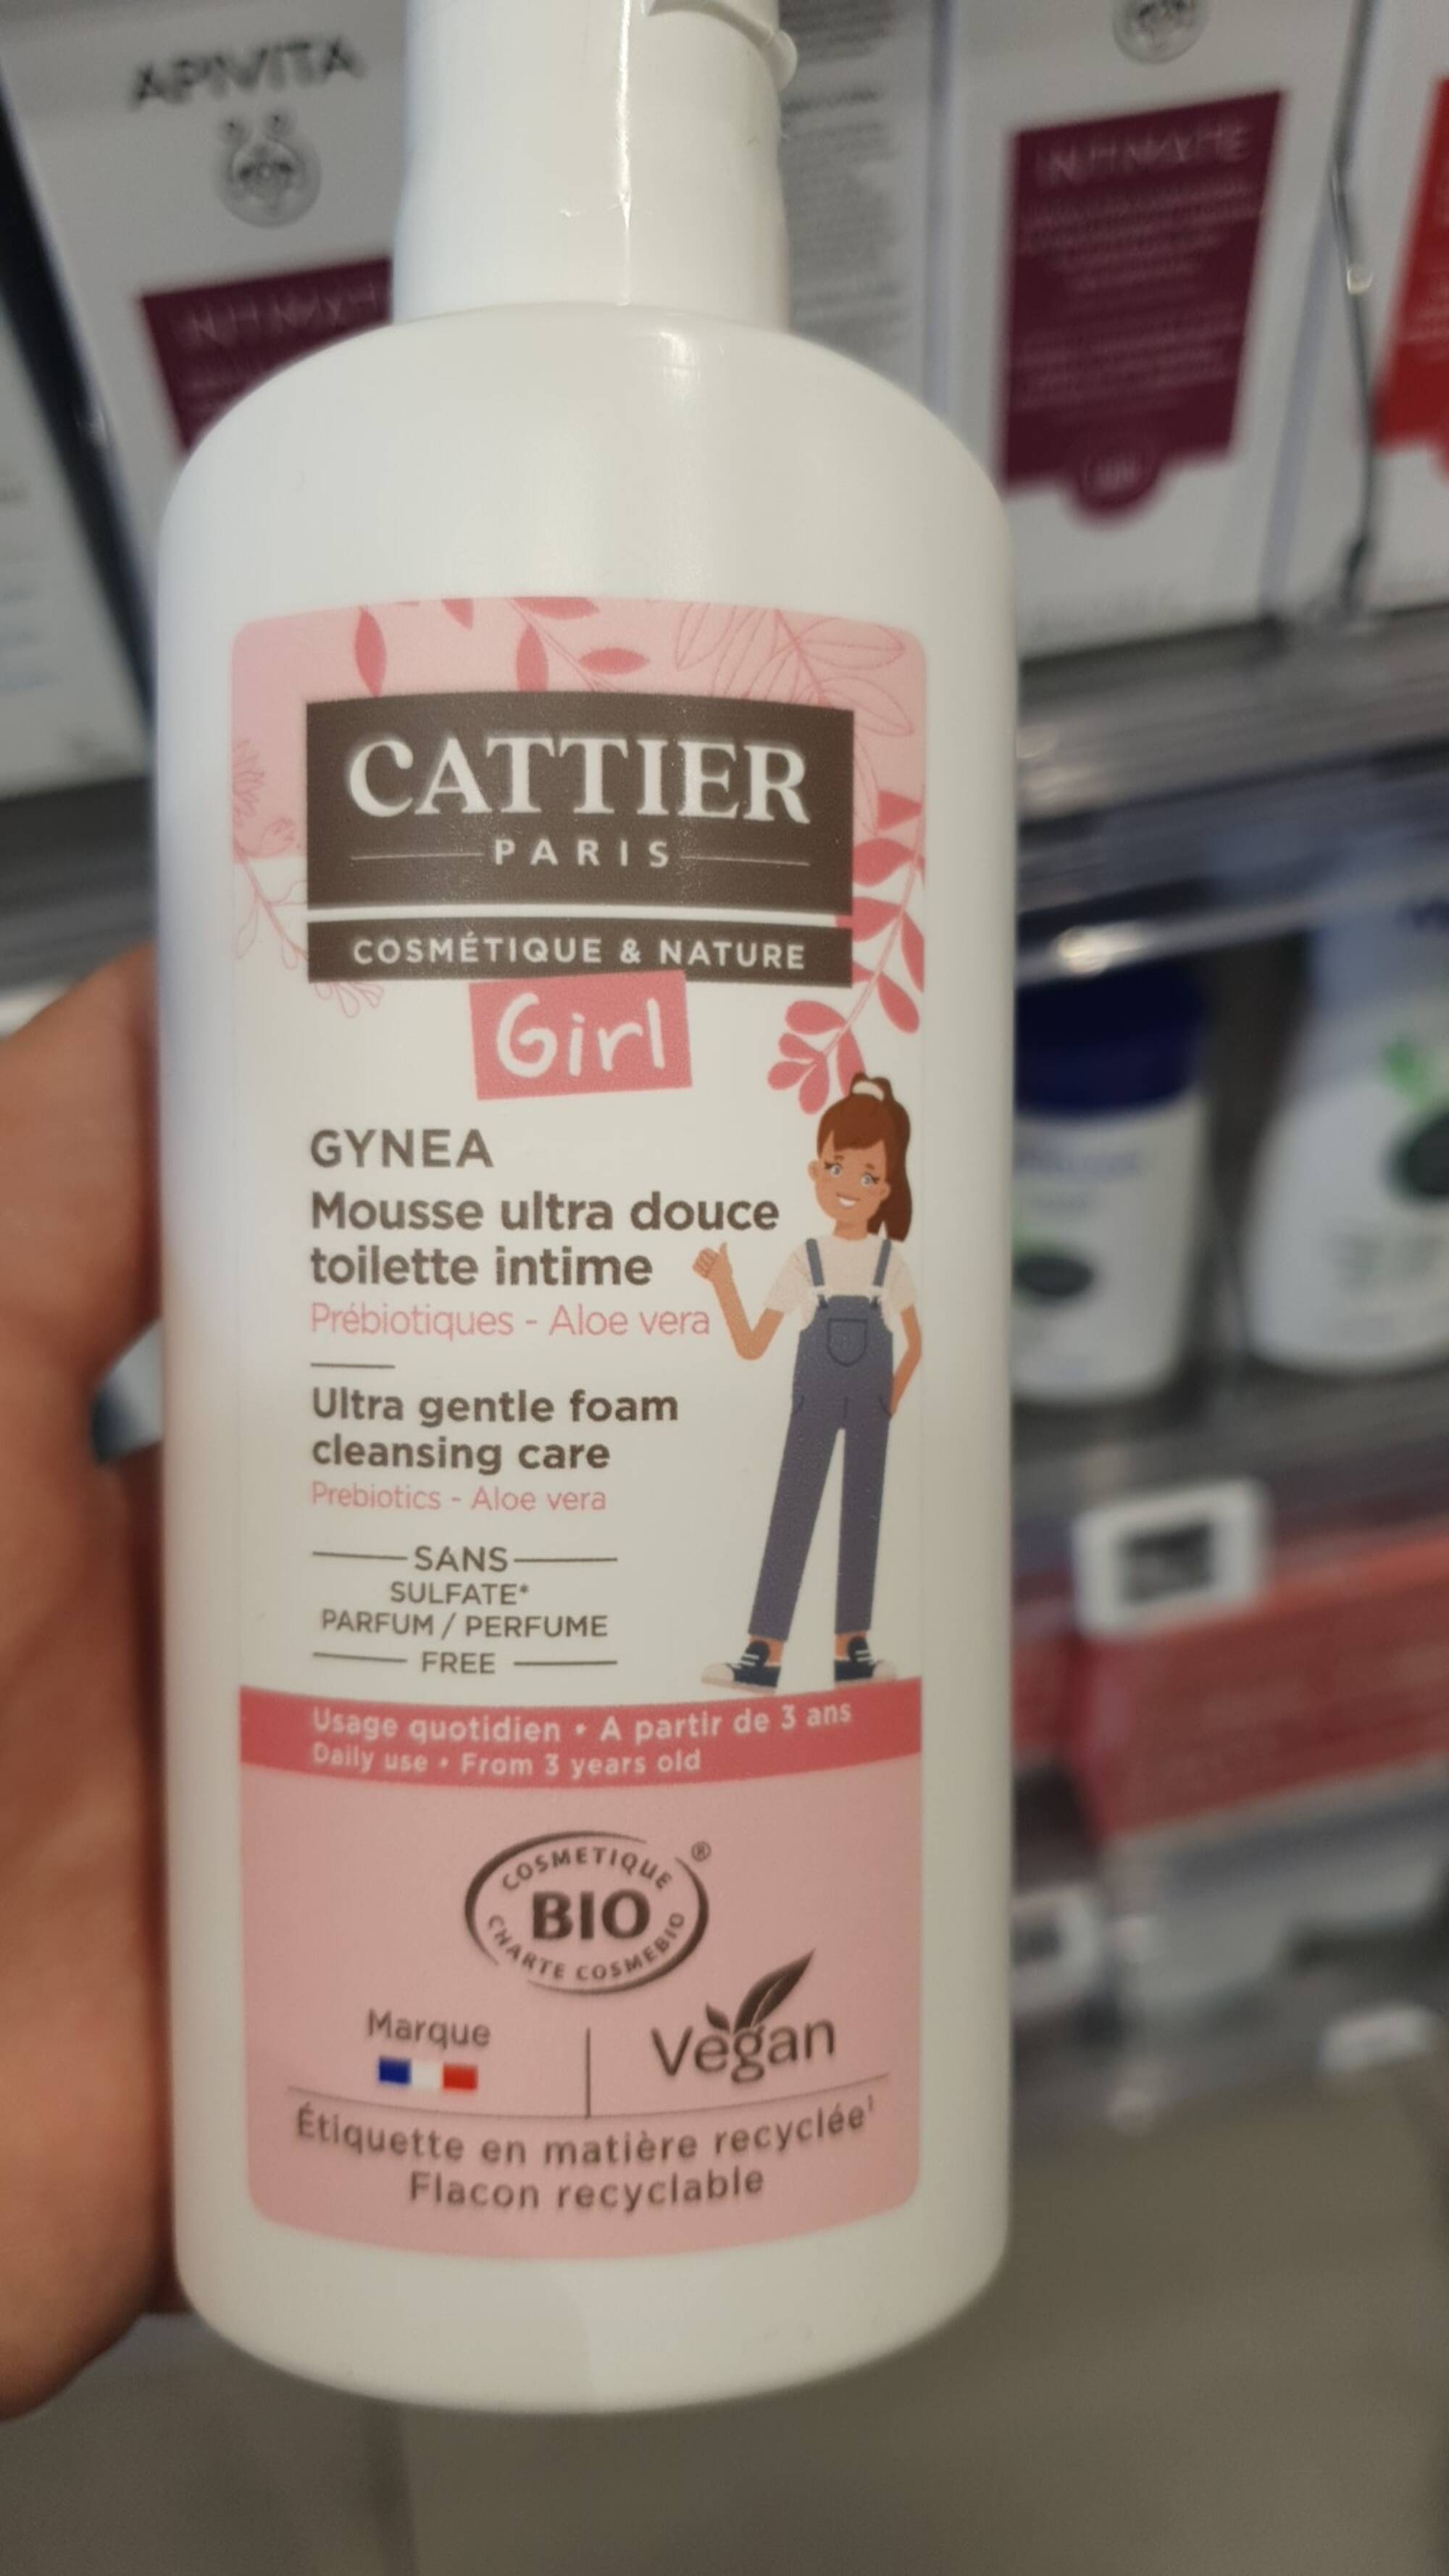 CATTIER - Gynea - Mousse ultra douce toilette intime girl